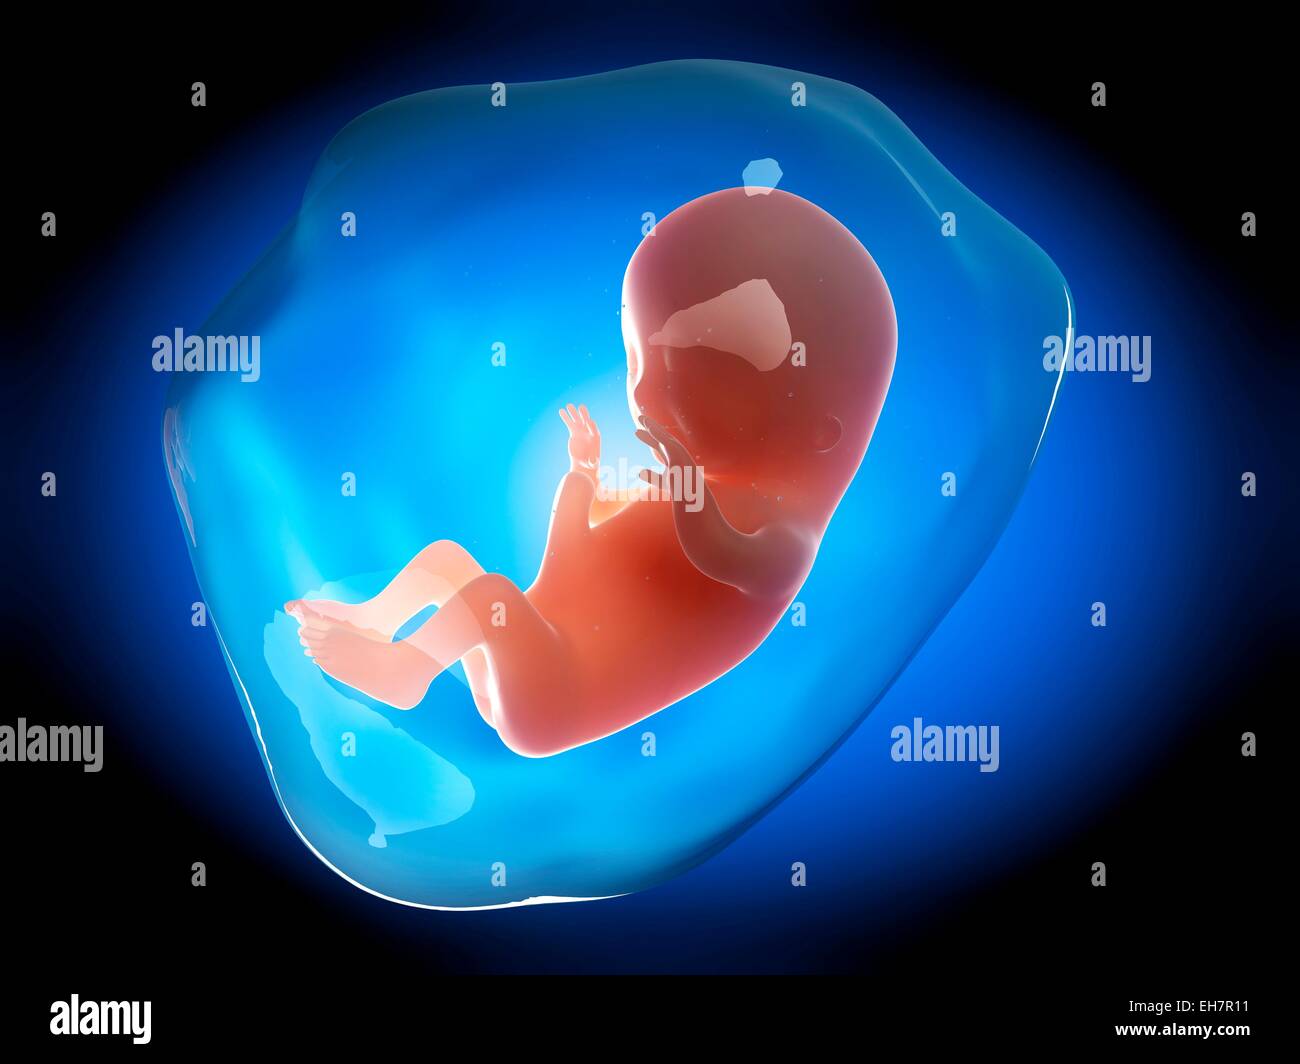 Human fetus at 3 months, illustration Stock Photo